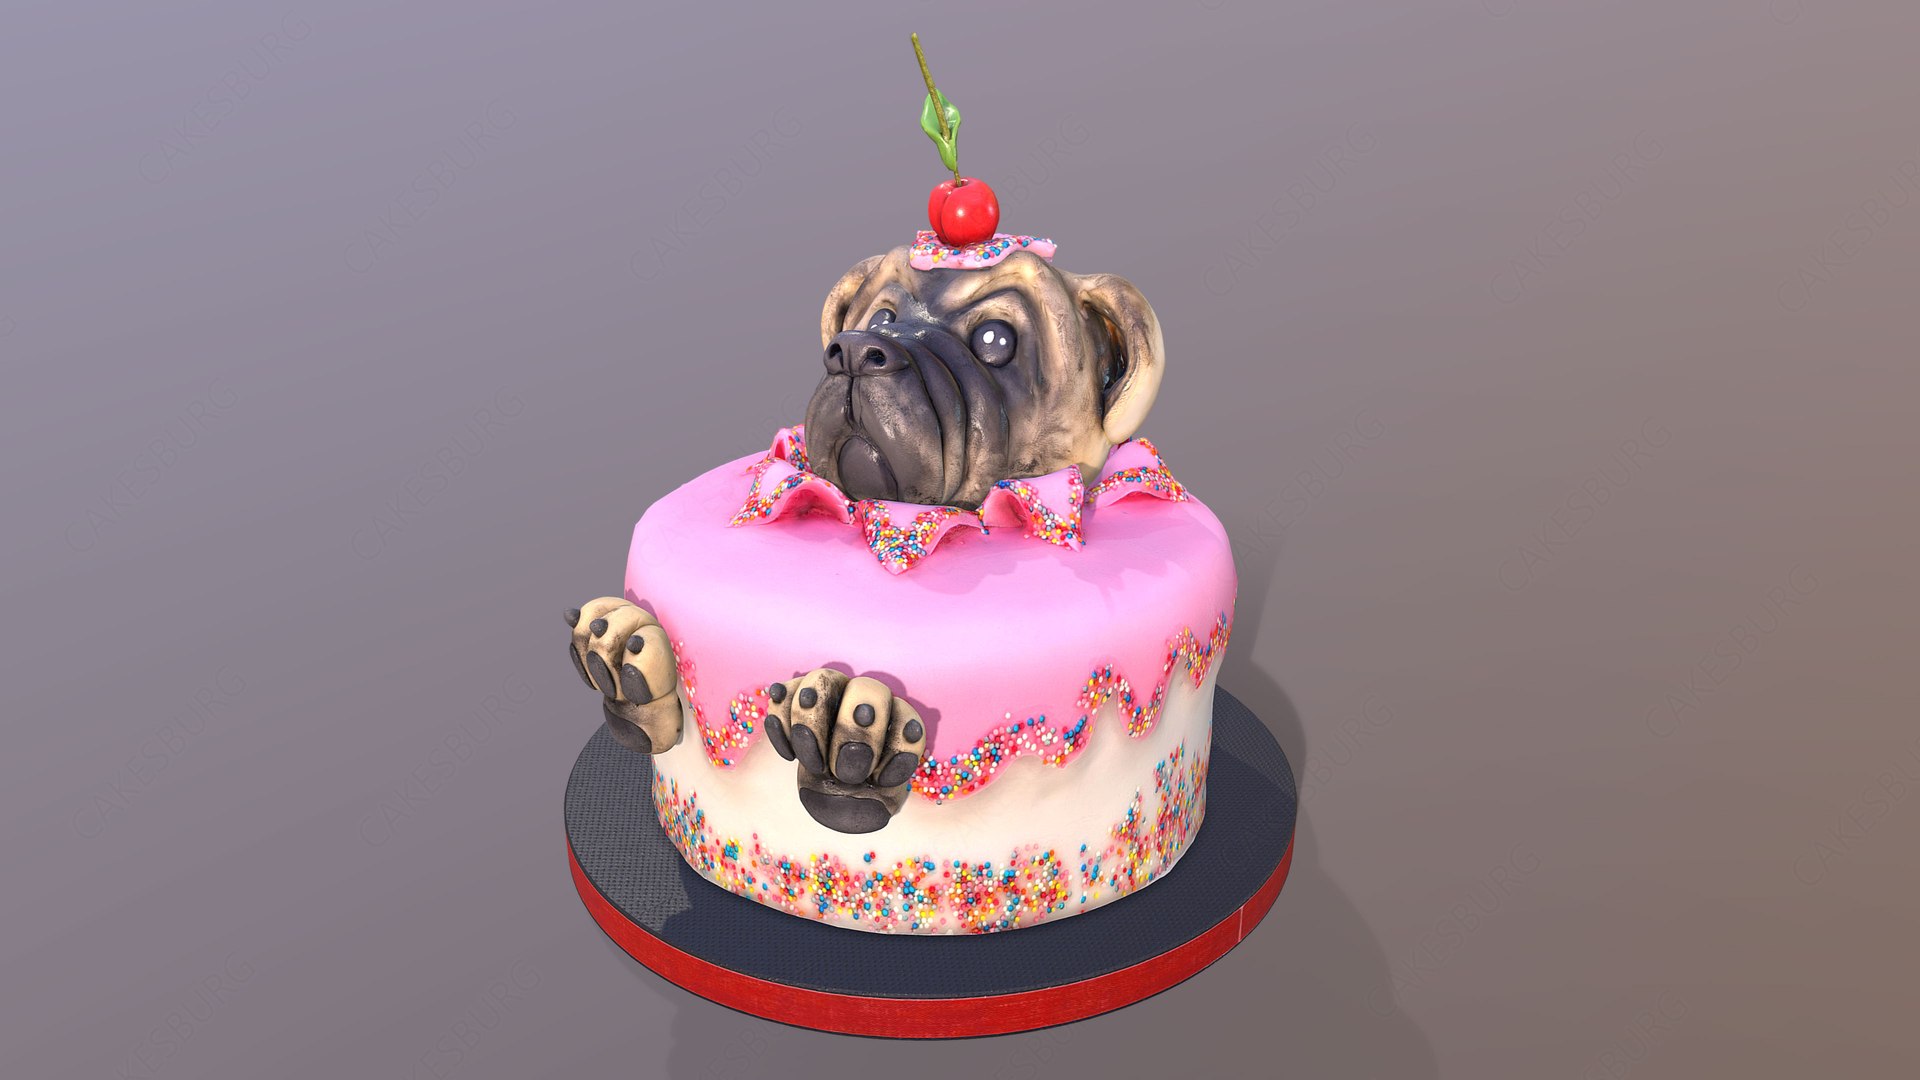 Cute Pug with a birthday cake